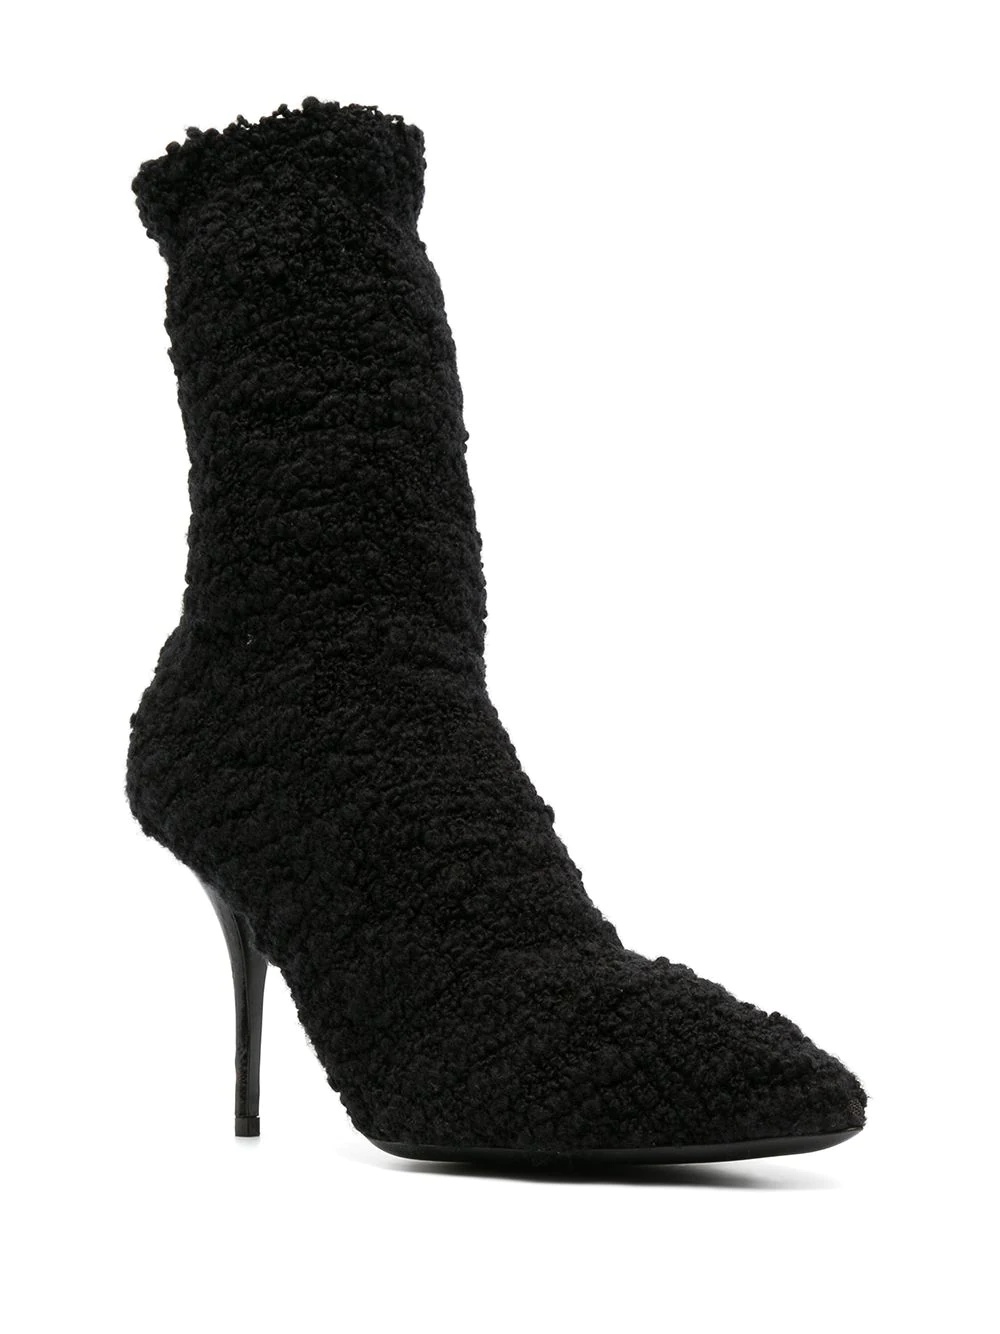 shearling stiletto heel boots - 2